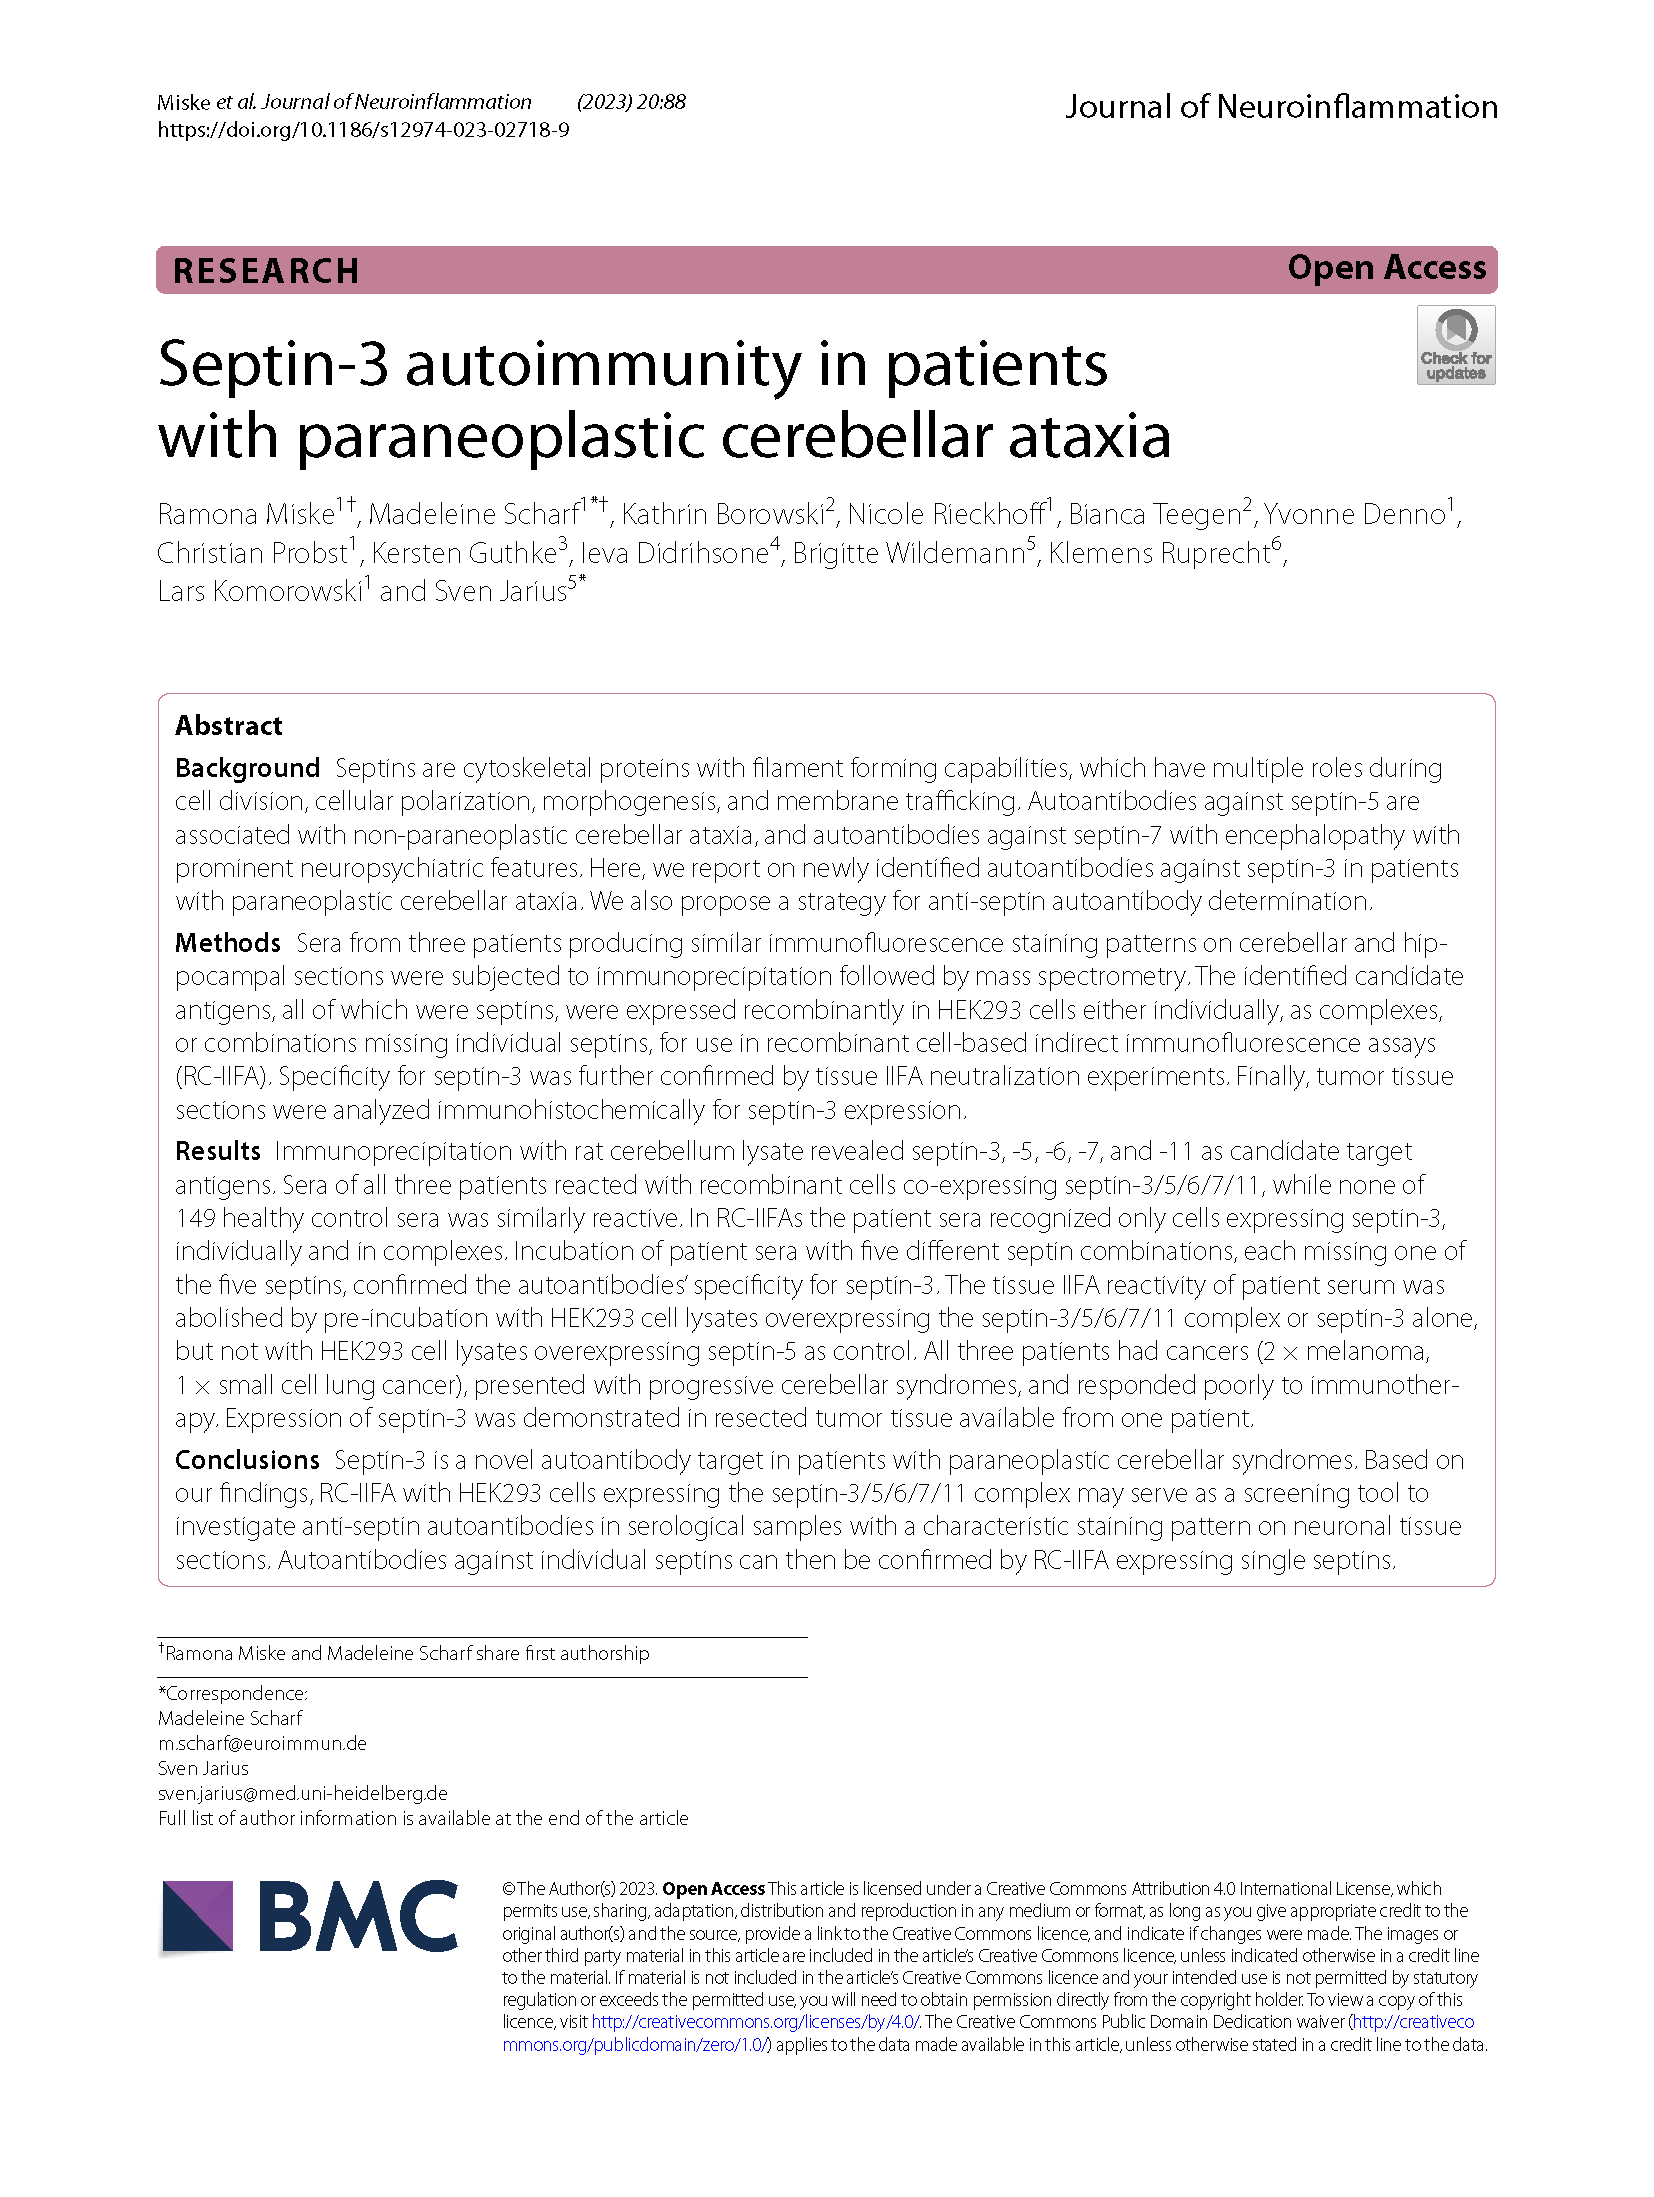 Septin-3 autoimmunity in patients with paraneoplastic cerebellar ataxia